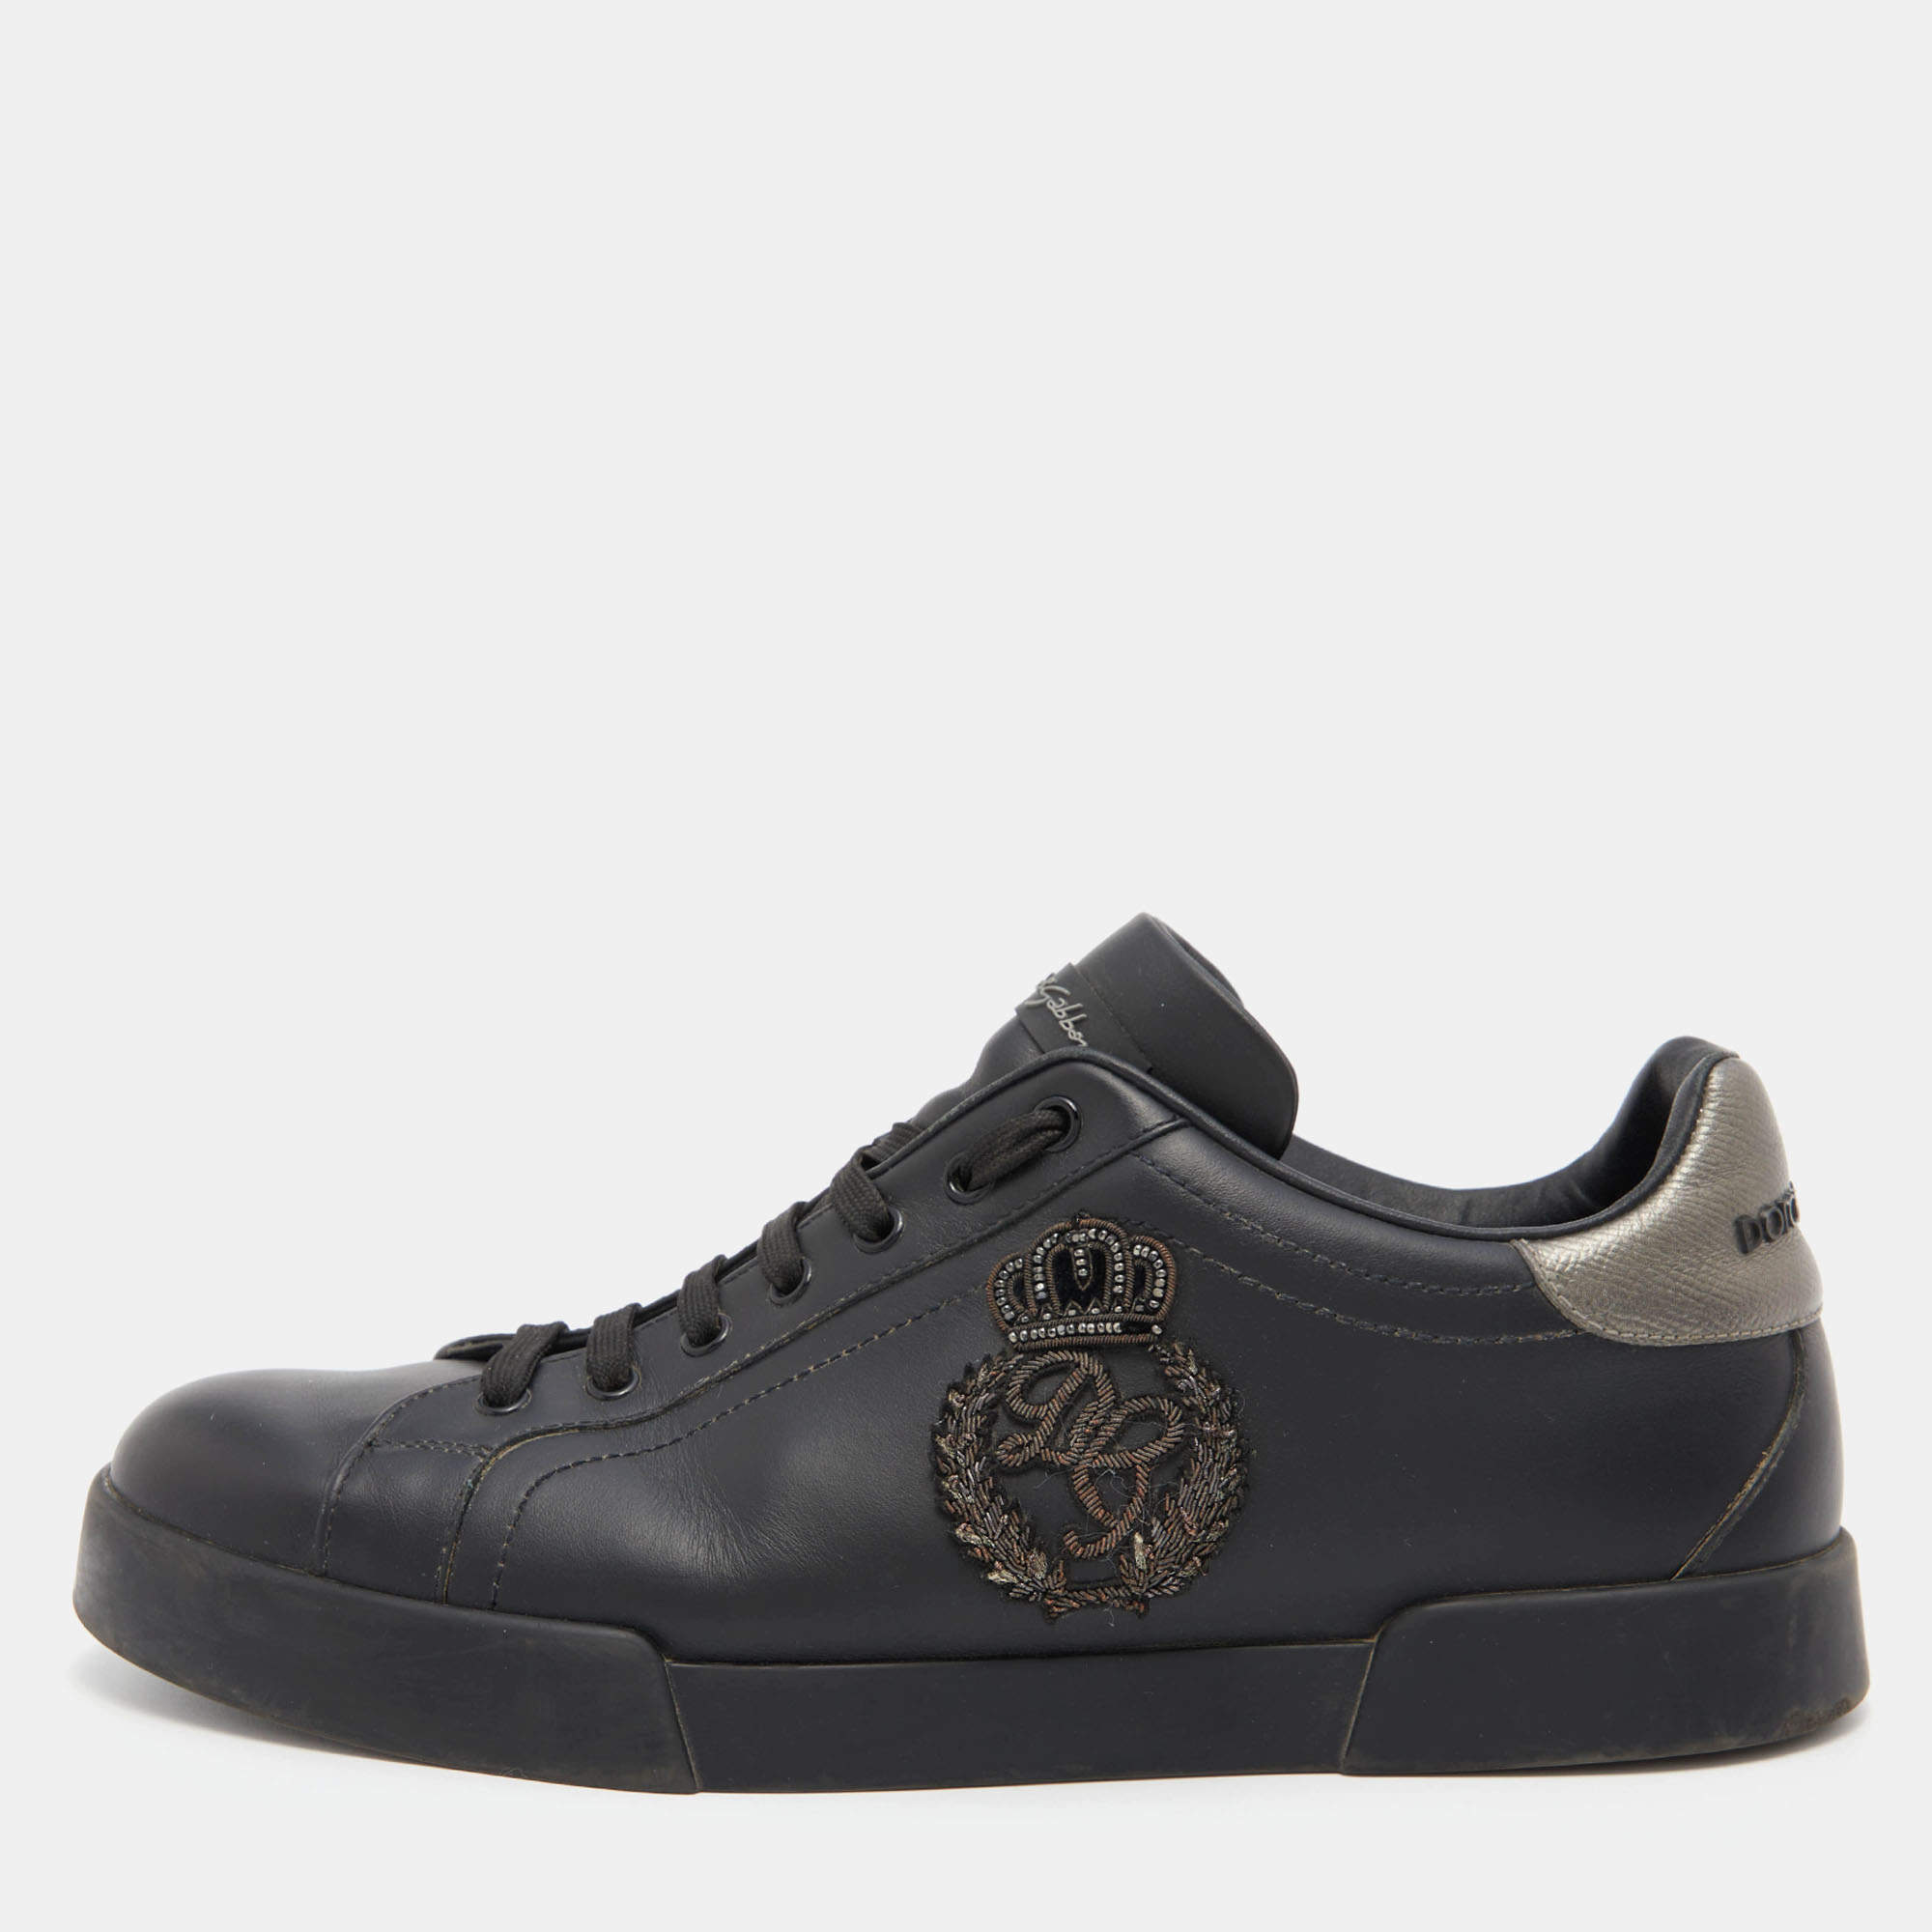 Dolce & Gabbana Black Leather Patch Portofino Low Top Sneakers Size 44